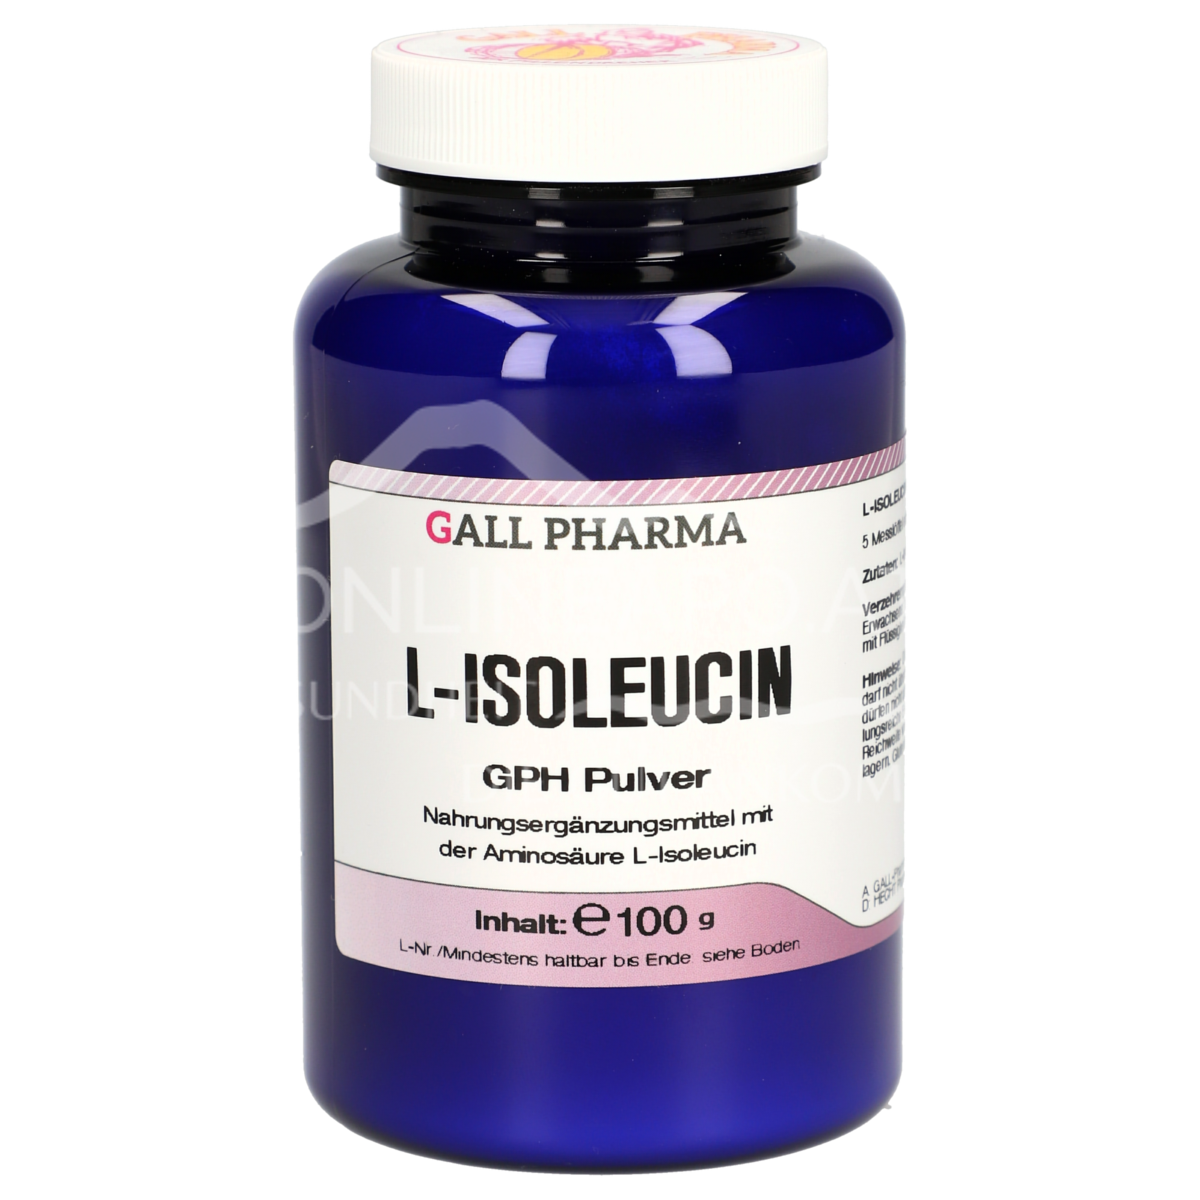 Gall Pharma L-Isoleucin Pulver